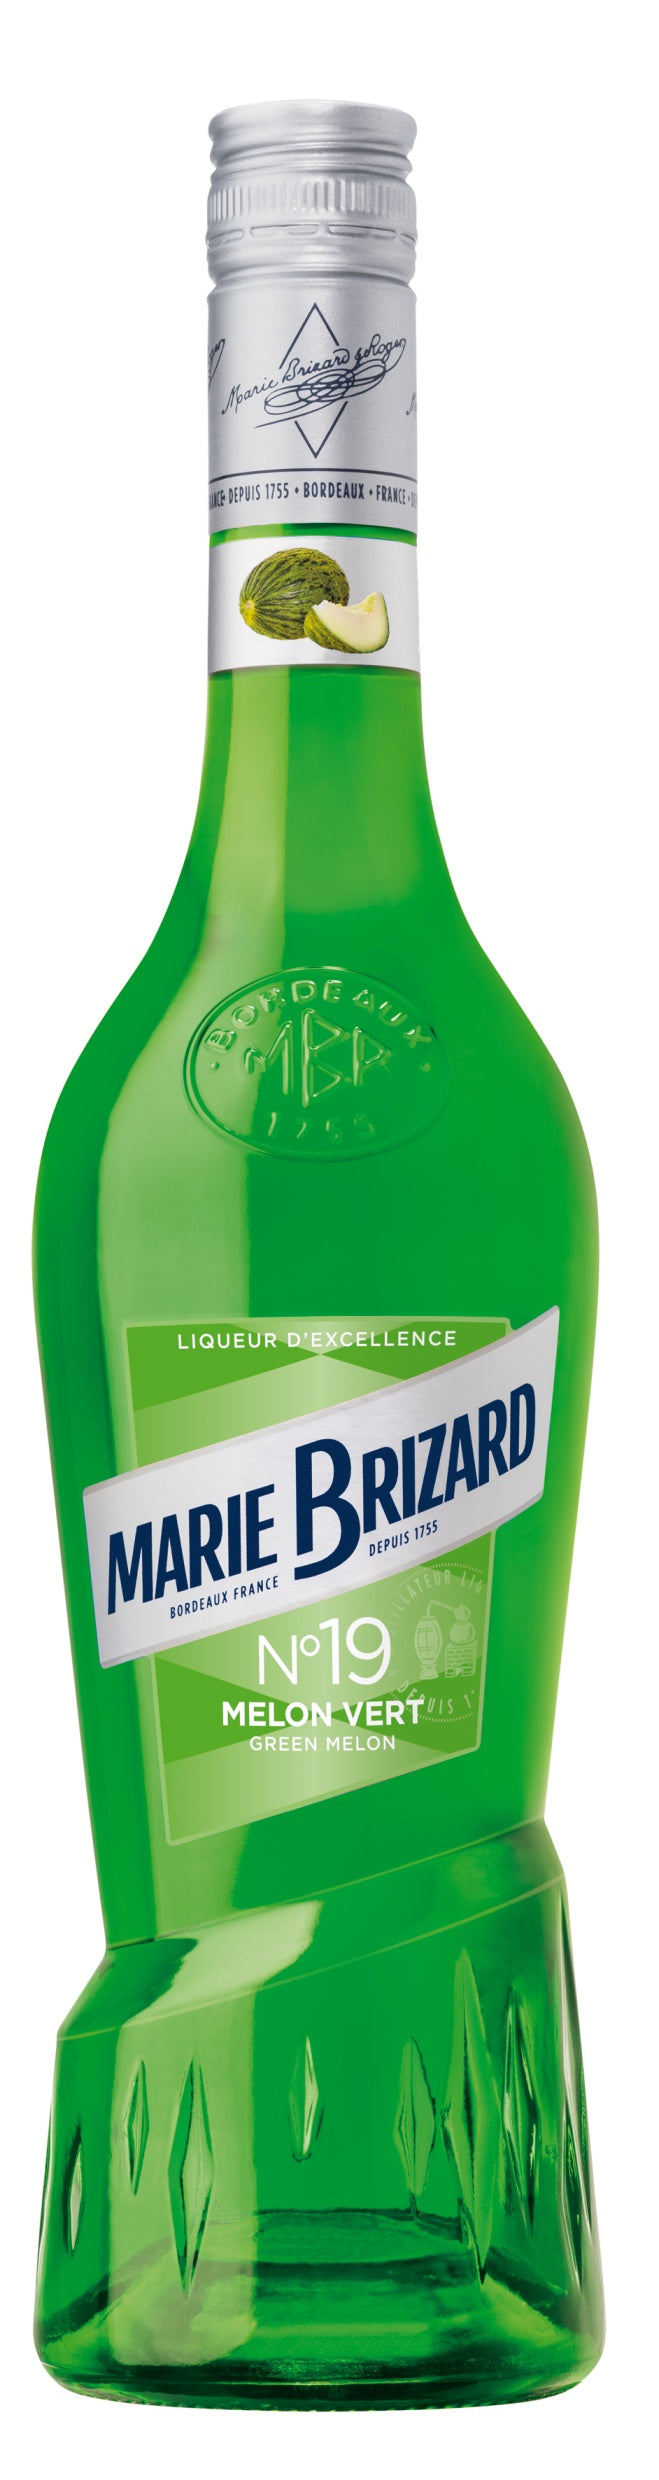 MARIE BRIZARD LIQUEUR GREEN MELON 70CL